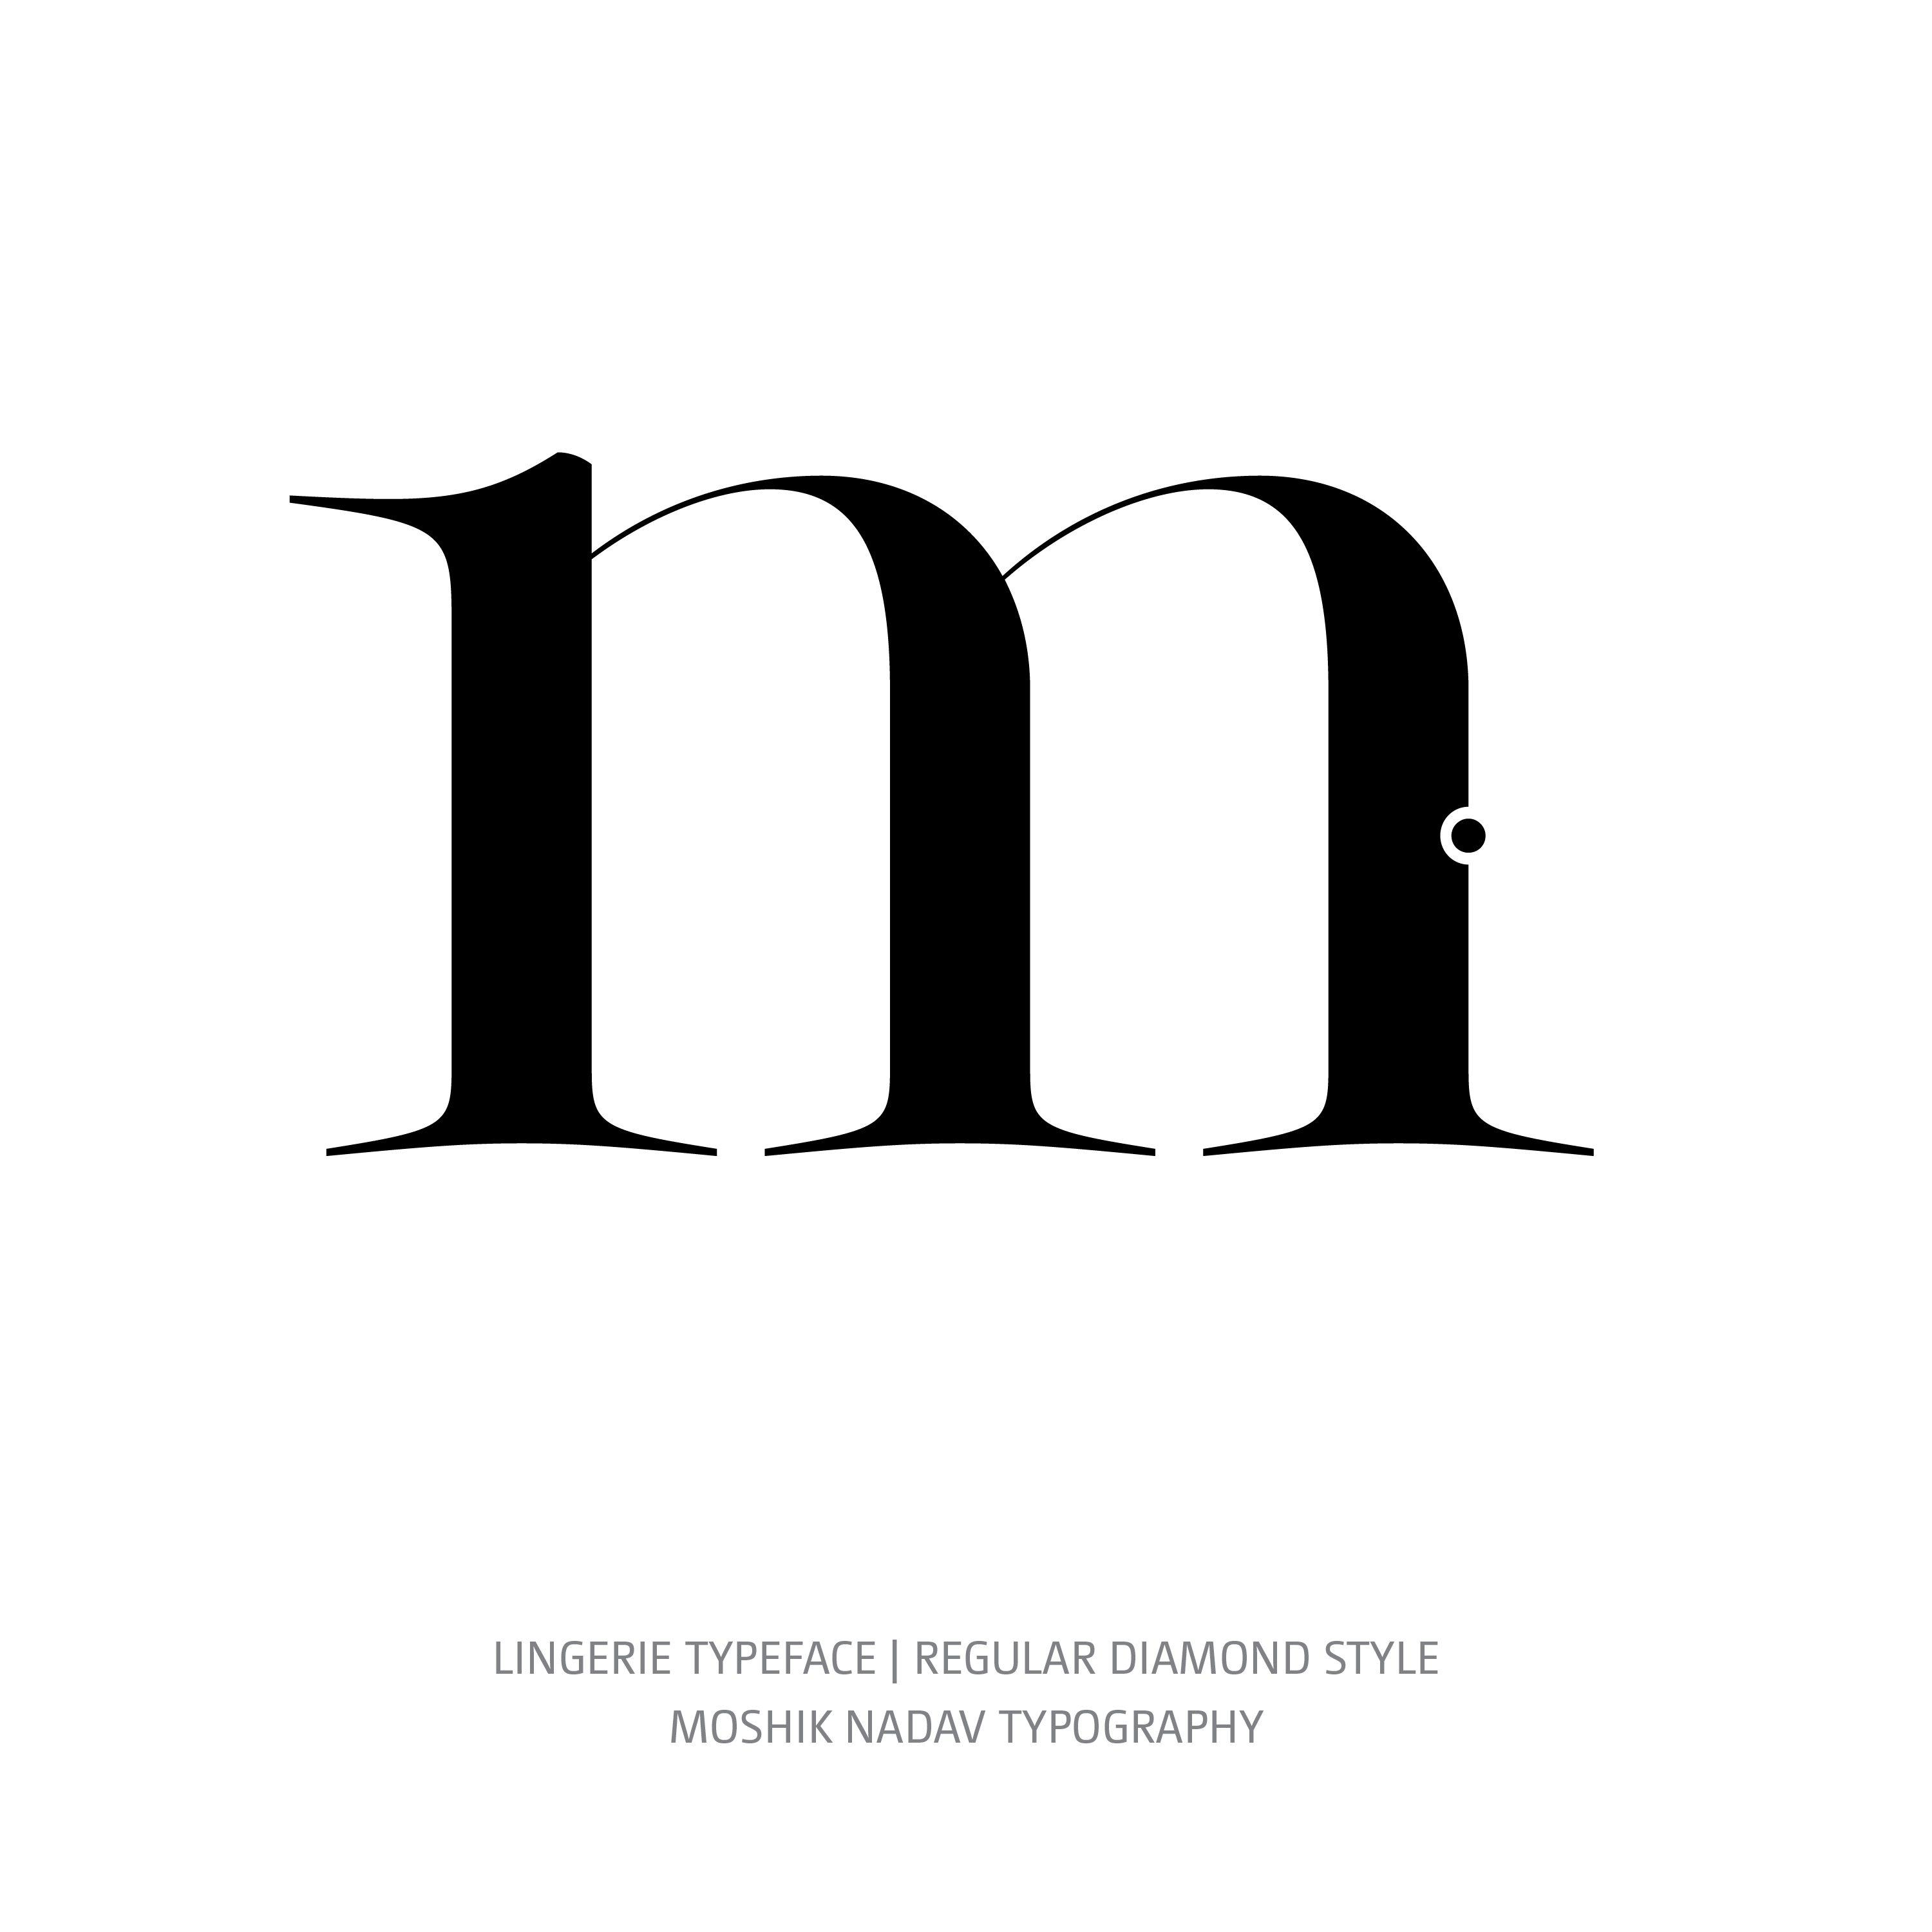 Lingerie Typeface Regular Diamond m